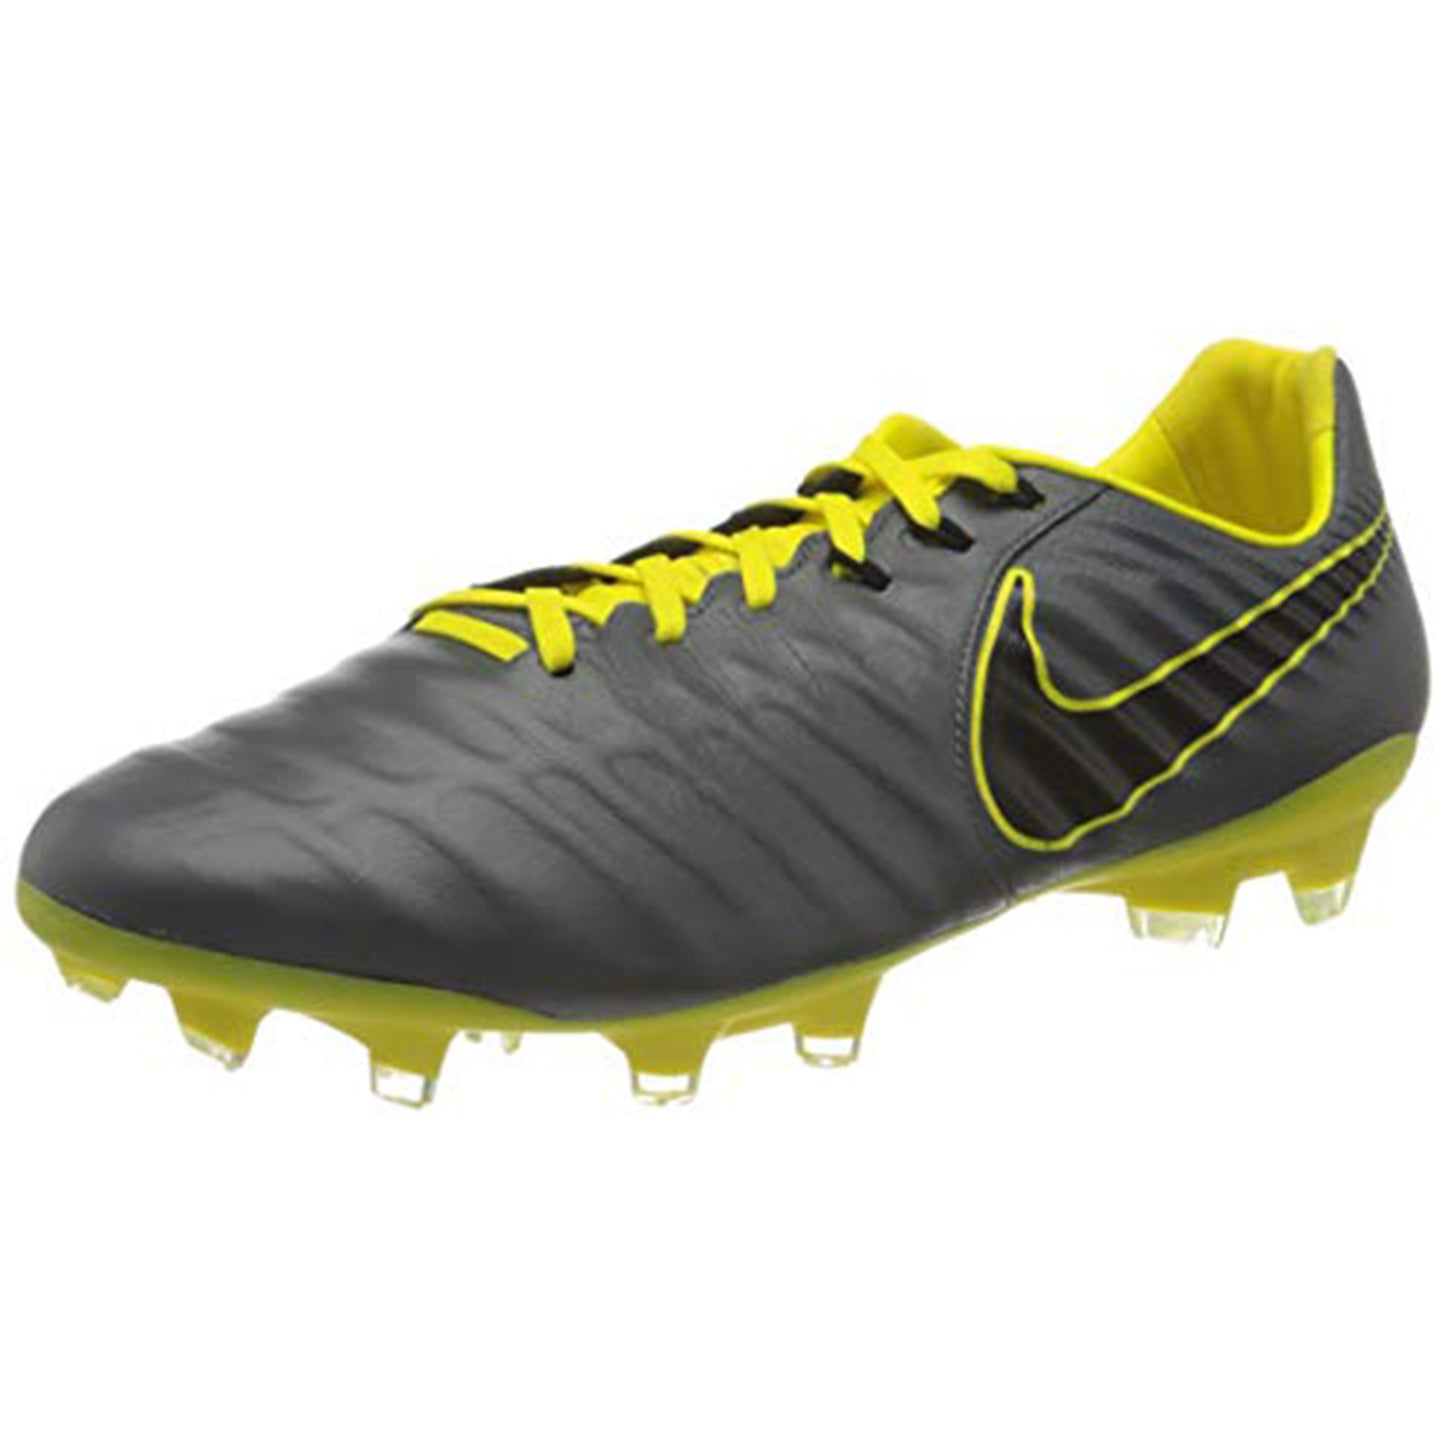 Nike Soccer Legend 7 Pro Fg Taille 13 - Homme AH7241-070 GrisNoir/Opti-Jaune